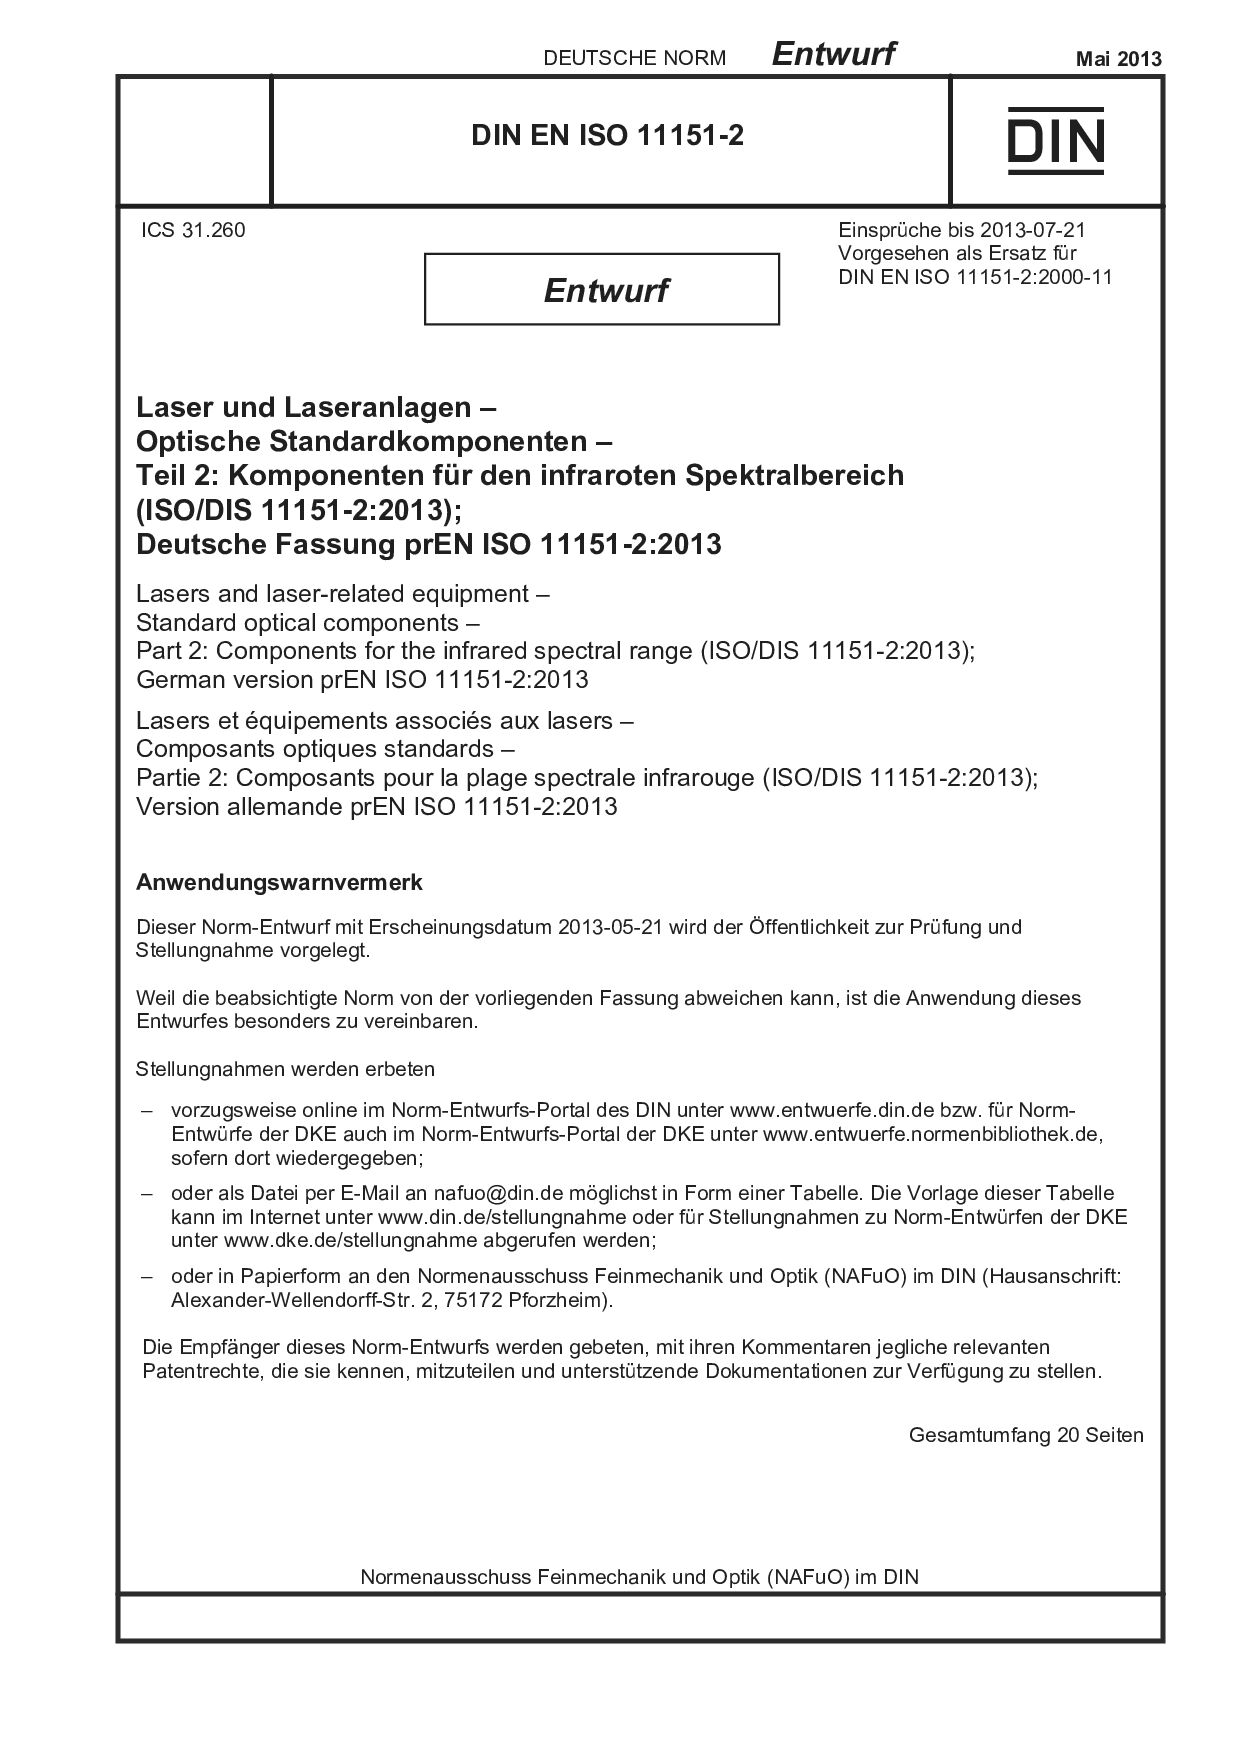 DIN EN ISO 11151-2 E:2013-05